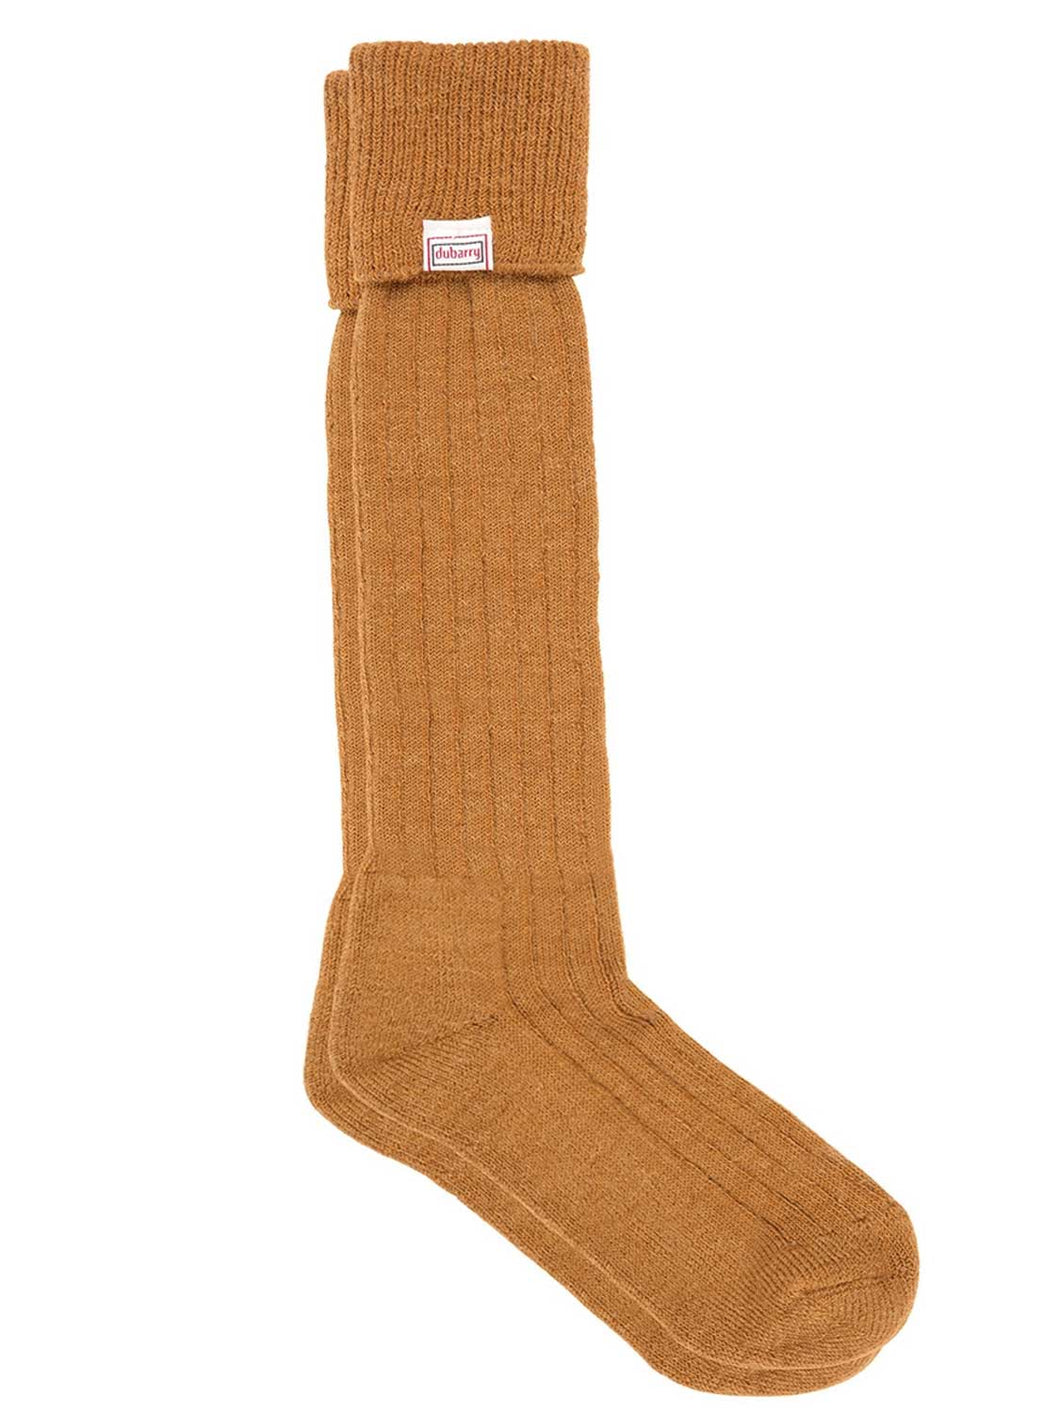 DUBARRY Alpaca Wool Socks - Mustard